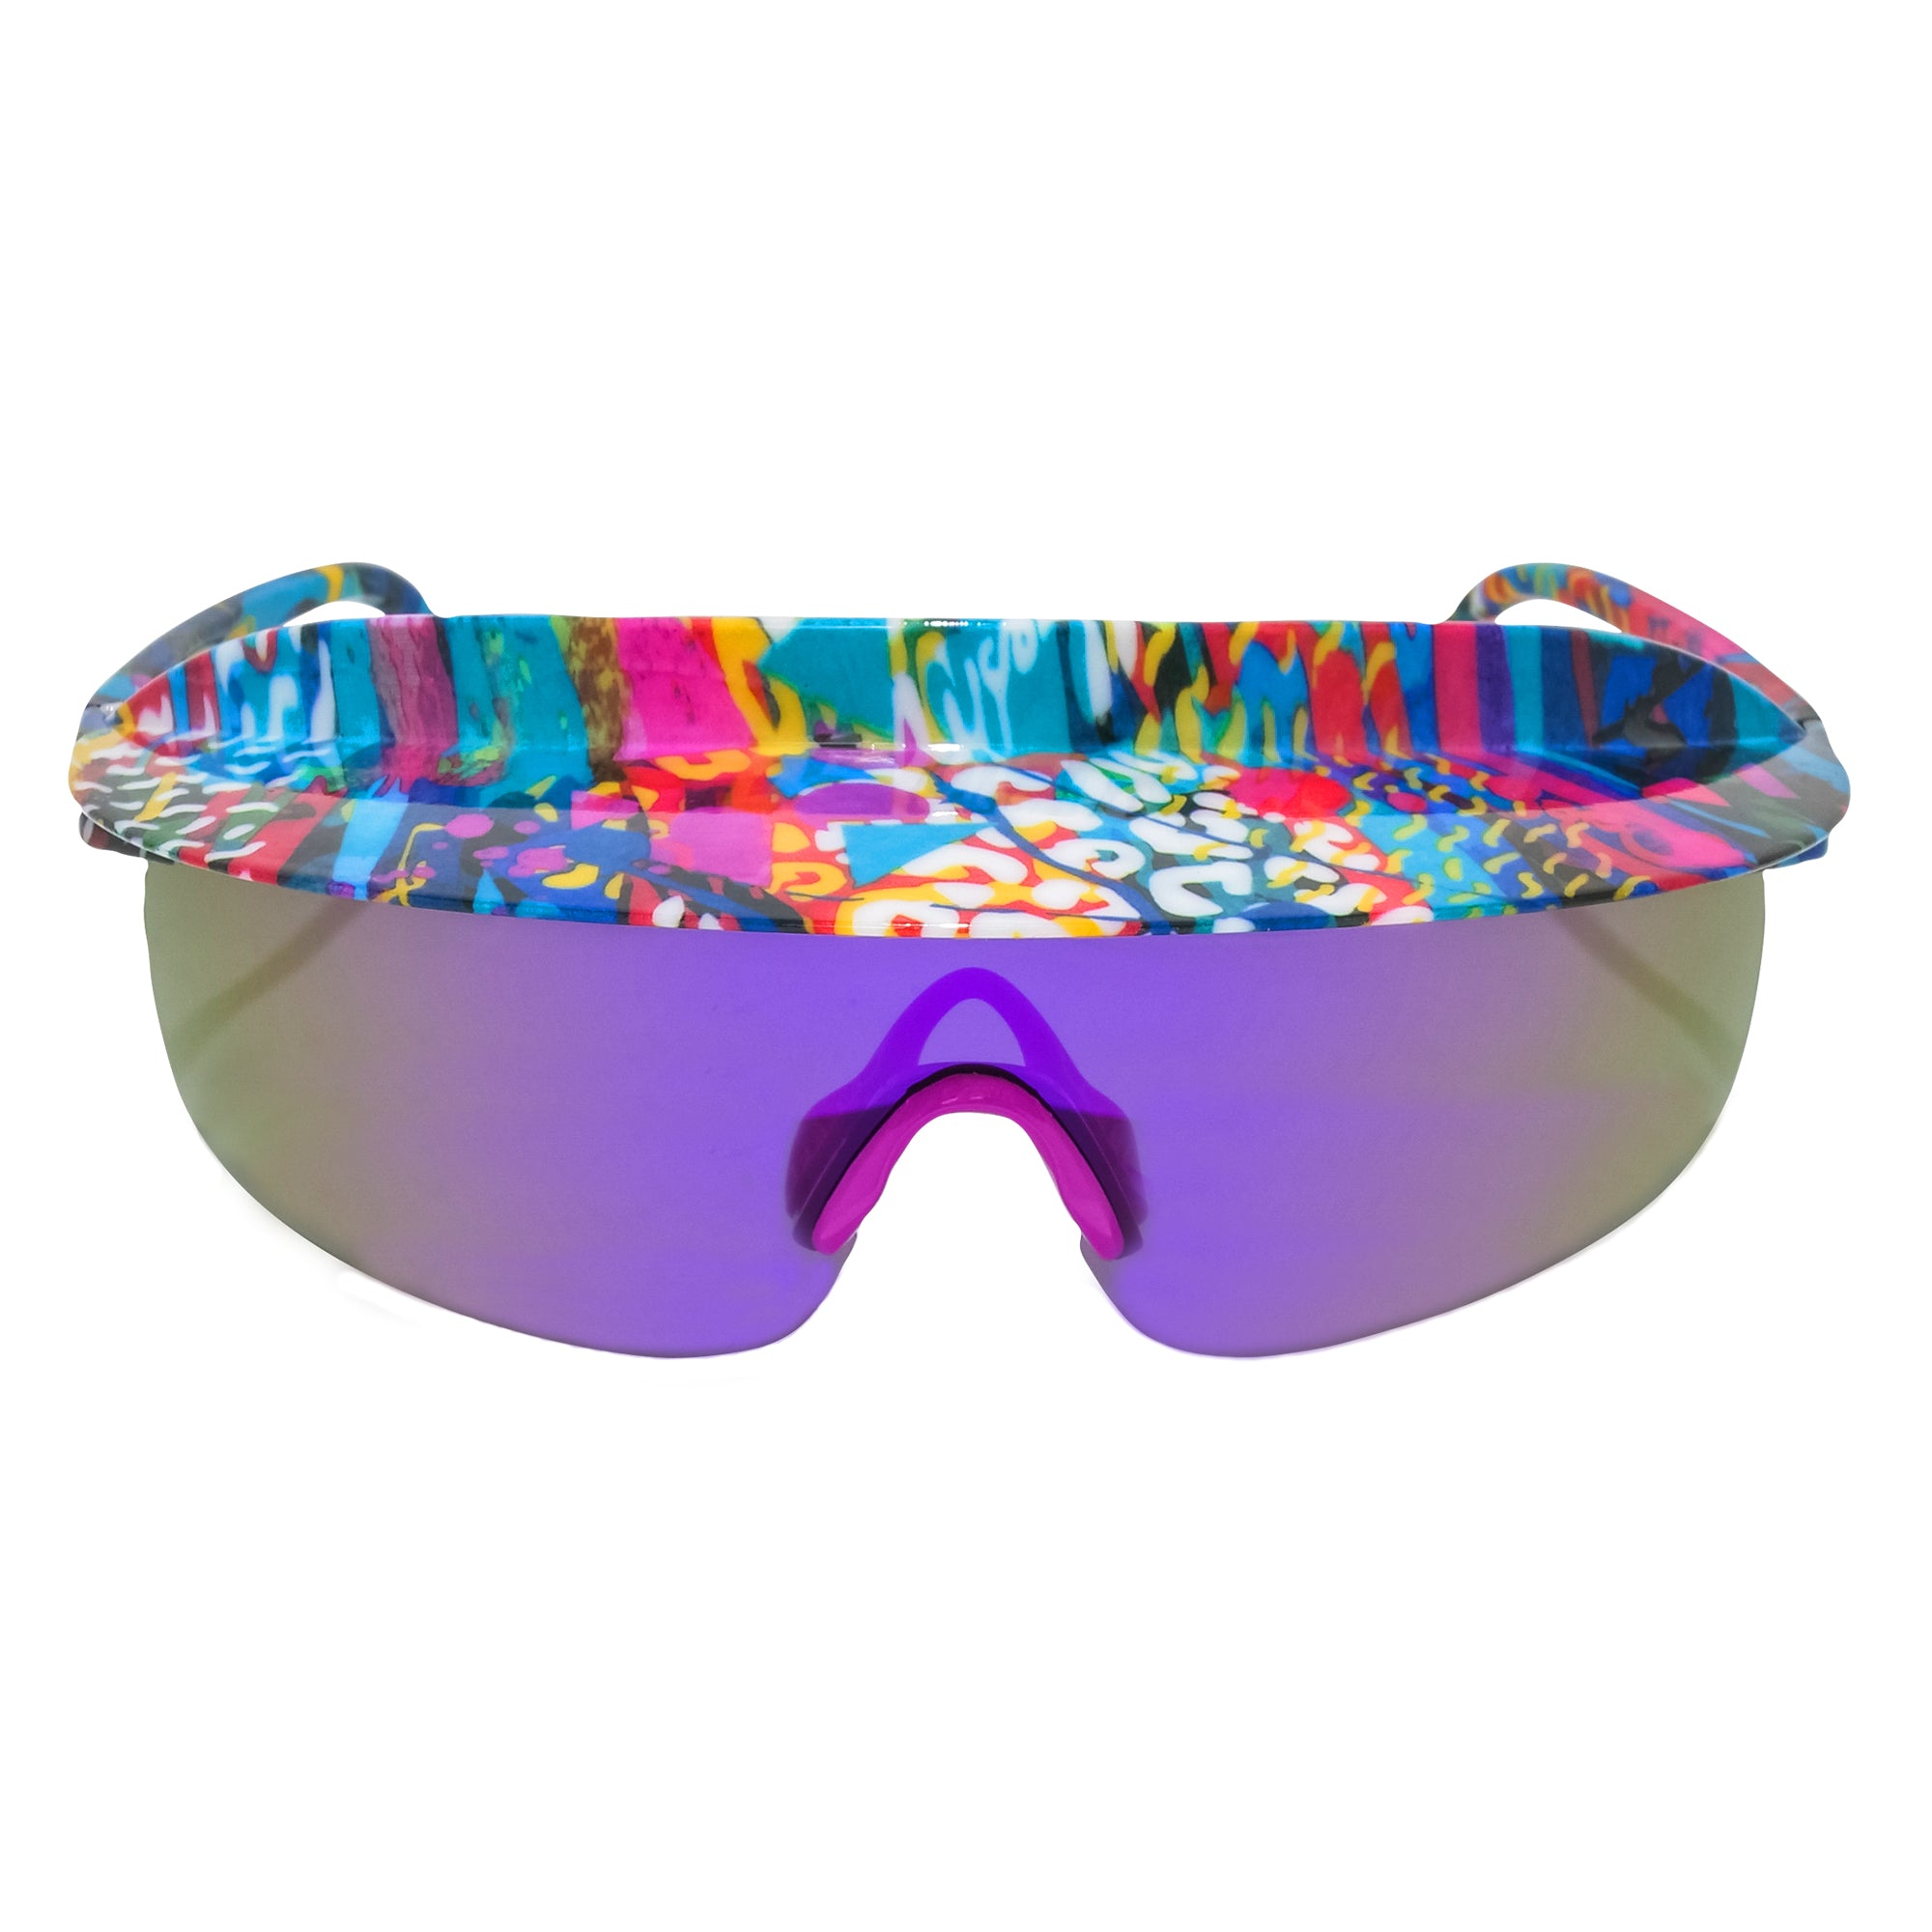 Van Dopes 80's Retro Vintage Ski Visor Shade Sunglasses. Coogi inspired throwback purple yellow red blue pink visor shade sunglasses - Polarized UV400 boats to the slopes ski glasses. B Fresh Gear